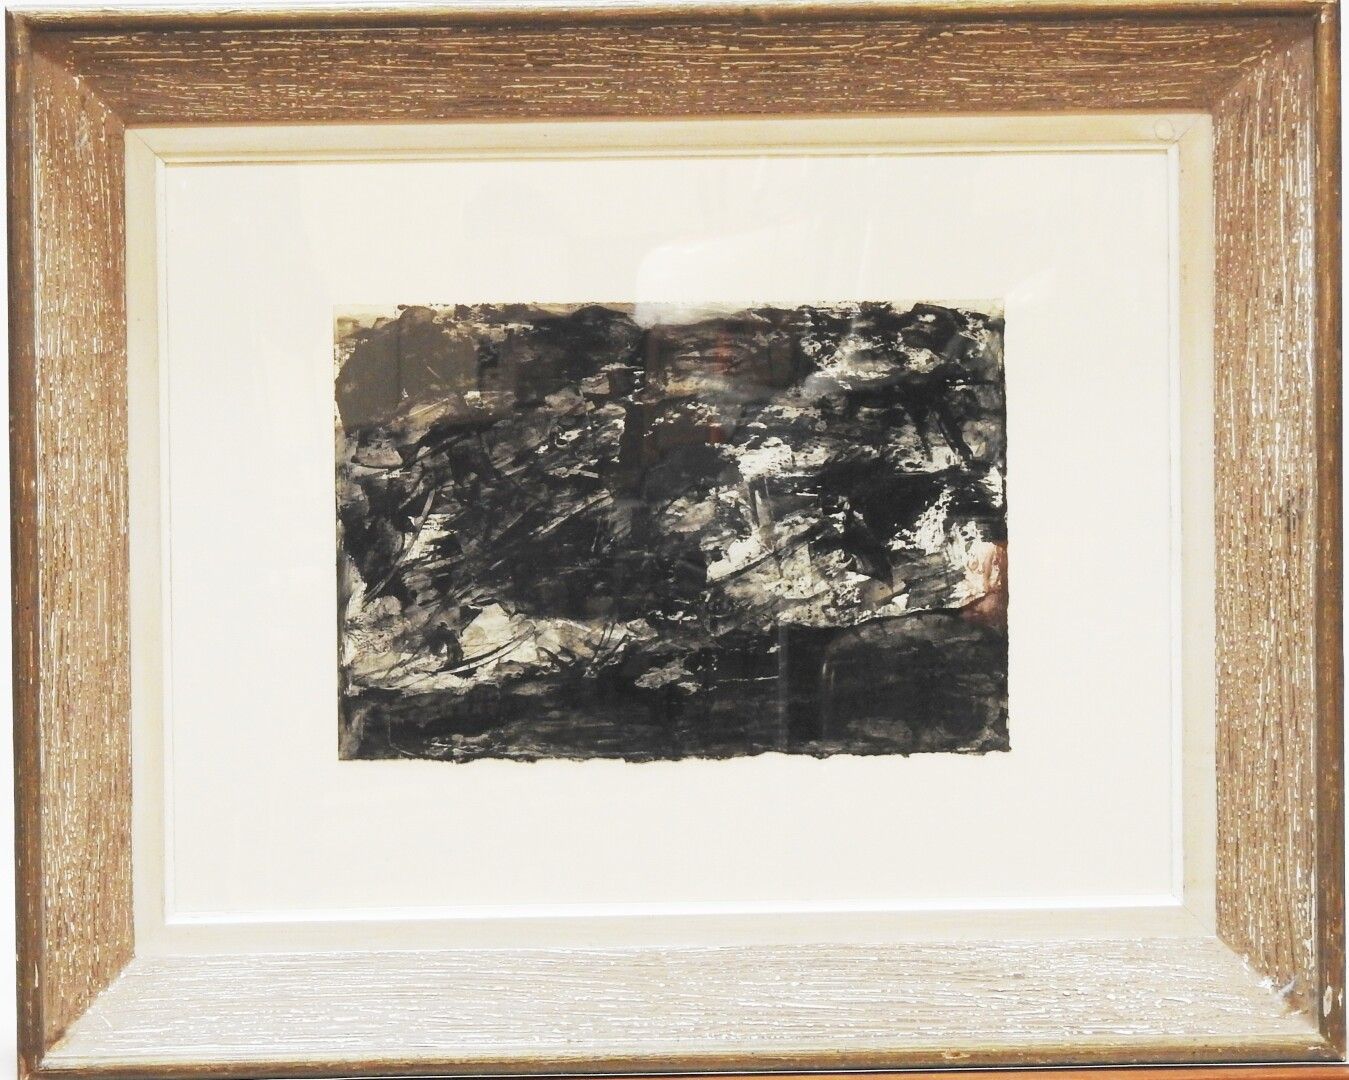 Null 斯塔查-哈伯恩 (1919 - 1969)

黑色和灰色的抽象构成

纸上水粉画，右下方有石墨签名和日期57

27 x 40 厘米

出处：前BAR&hellip;